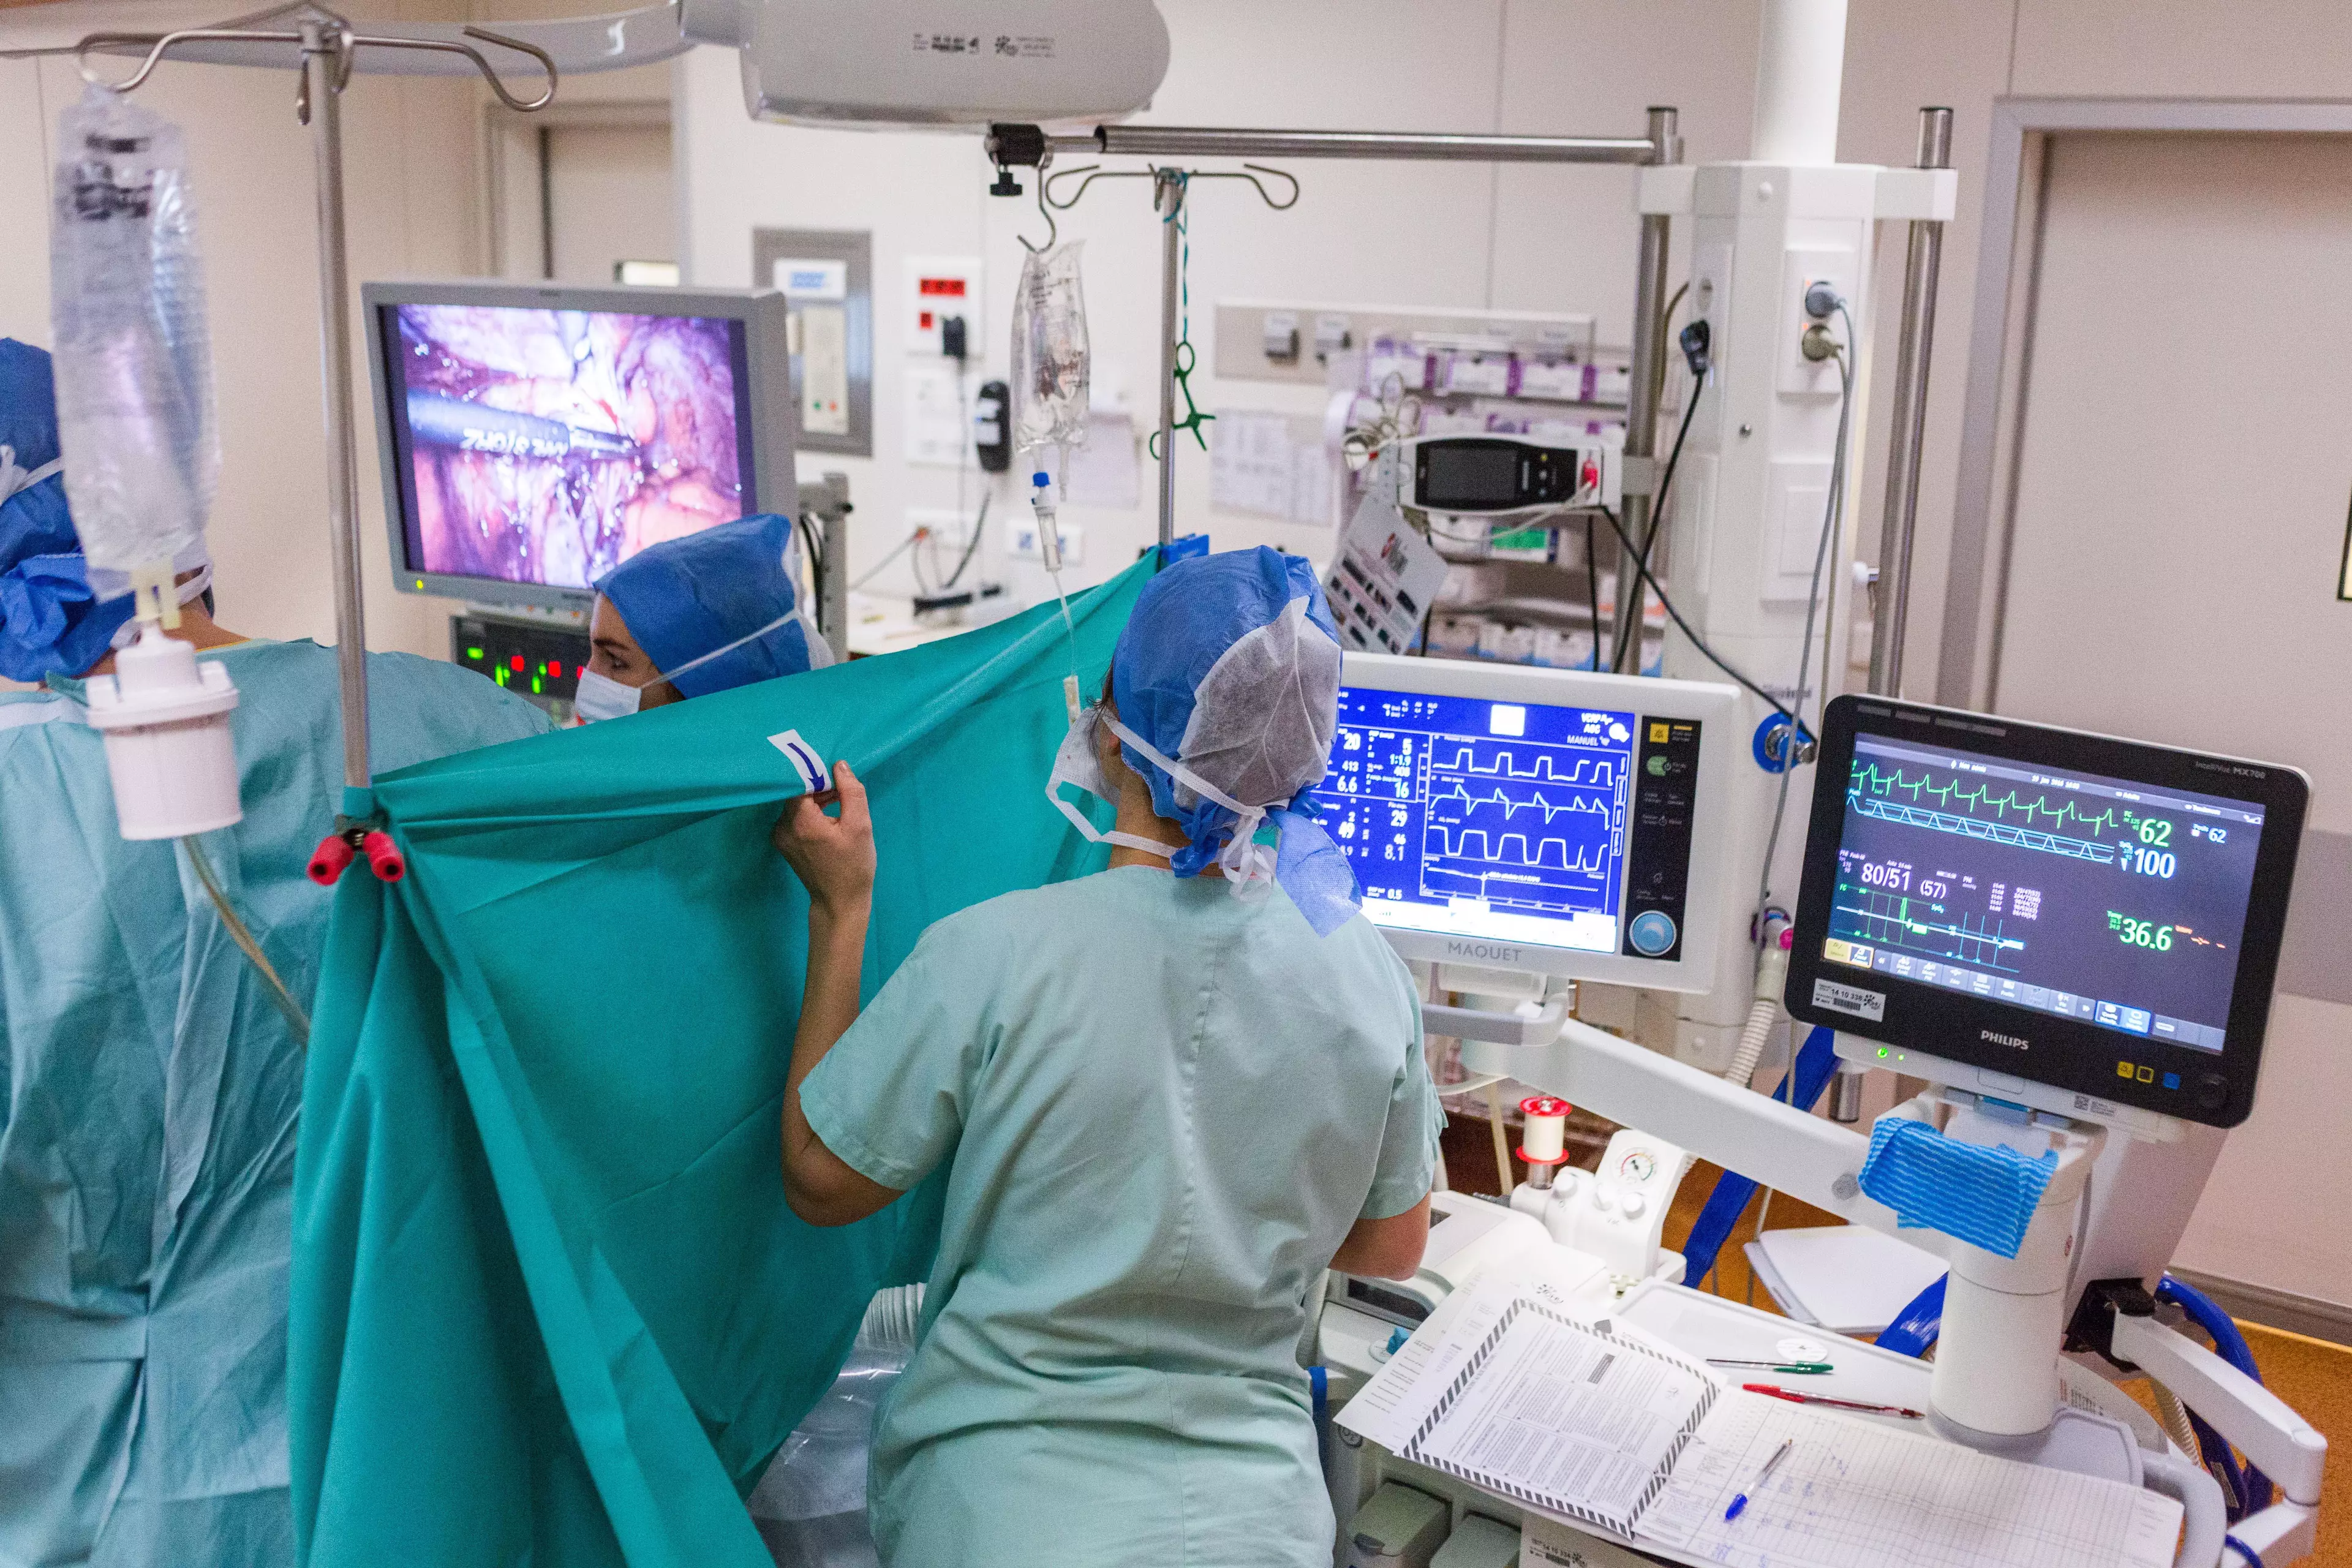 Surgical laparoscopy and hysteroscopy exploration, a treatment of endometriosis.